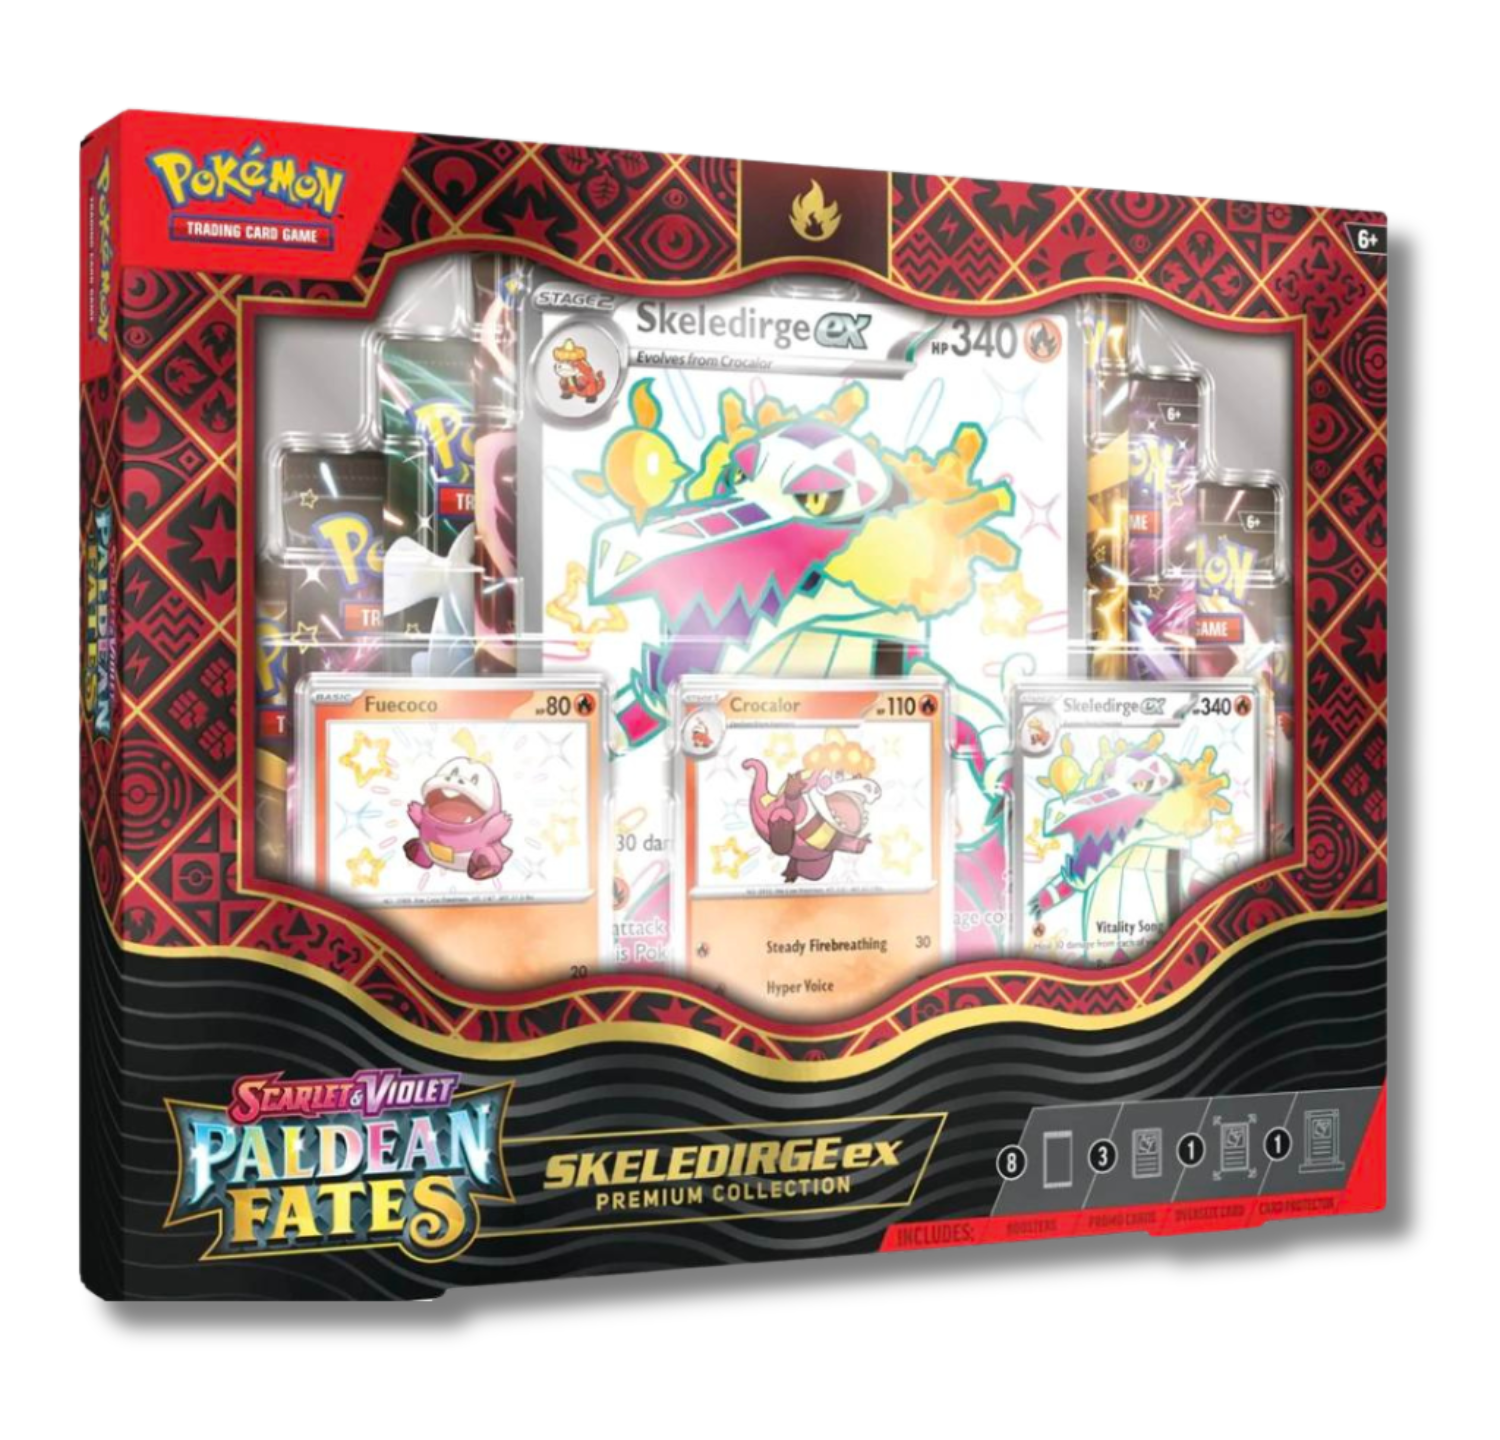 Pokemon Scarlet and Violet Paldean Fates ex Premium Collection | Skeledirge